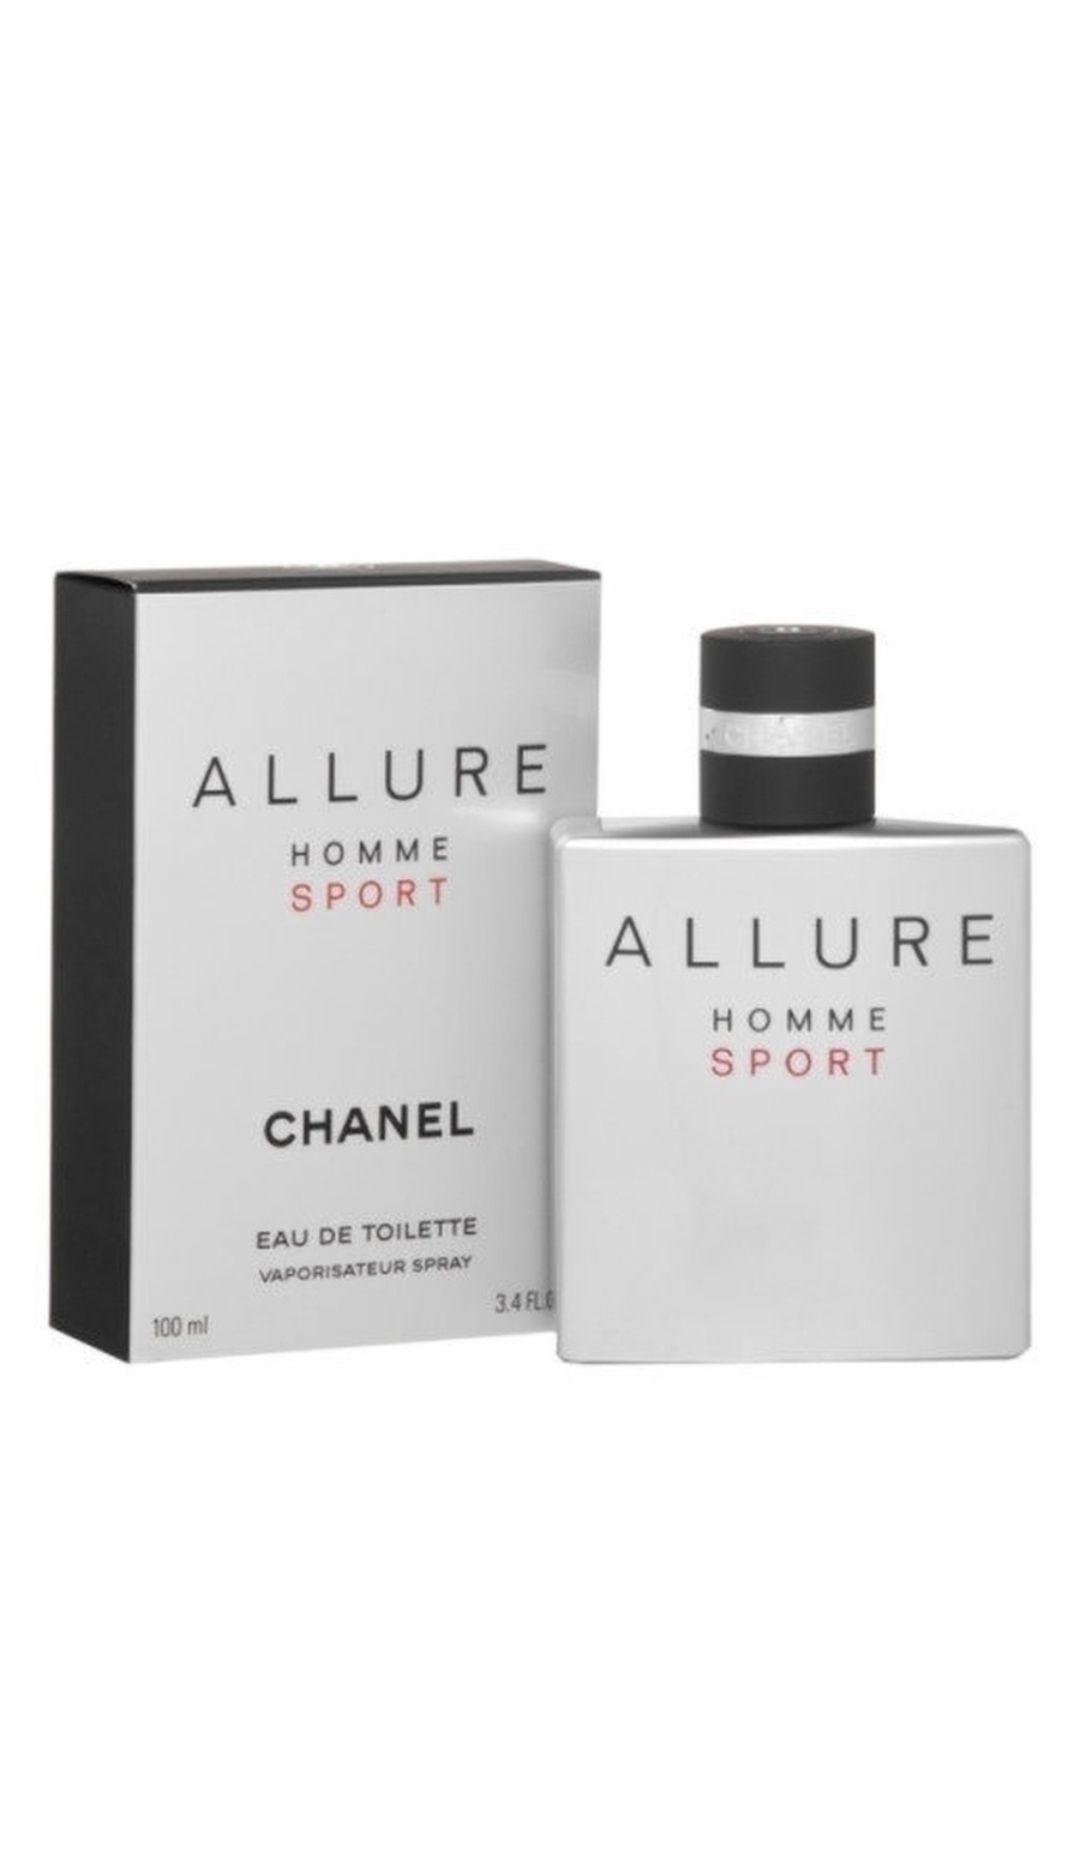 Chanel allure homme sport цены. Chanel Allure homme Sport. Chanel Allure homme Sport Cologne 100 ml. Аллюр Шанель мужские спорт Хомме. Шанель Аллюр спорт мужские 150 мл.